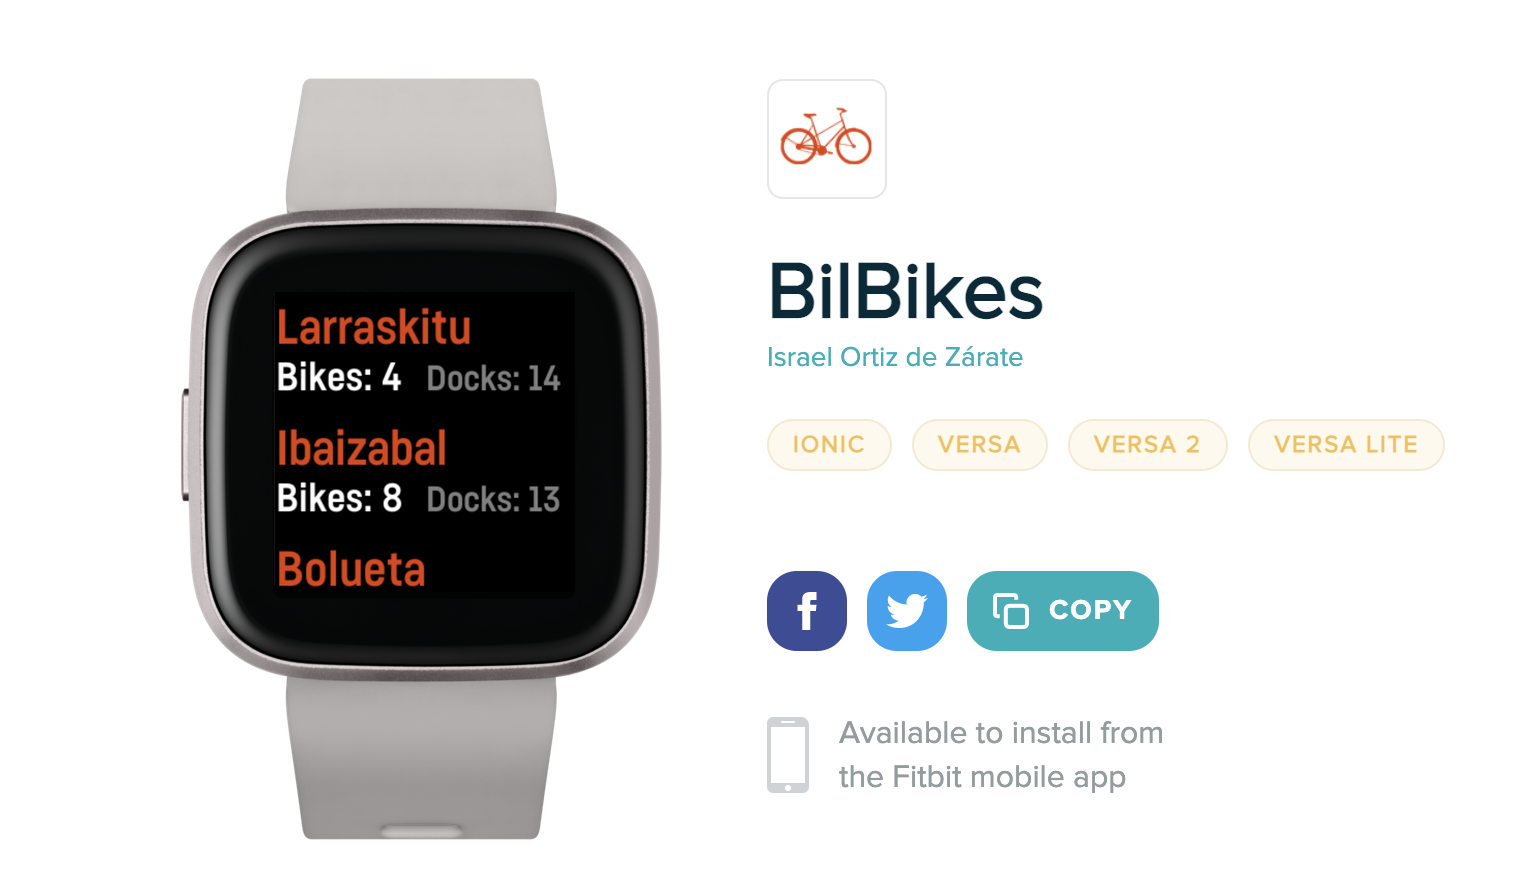 Bilbikes Fitbit app